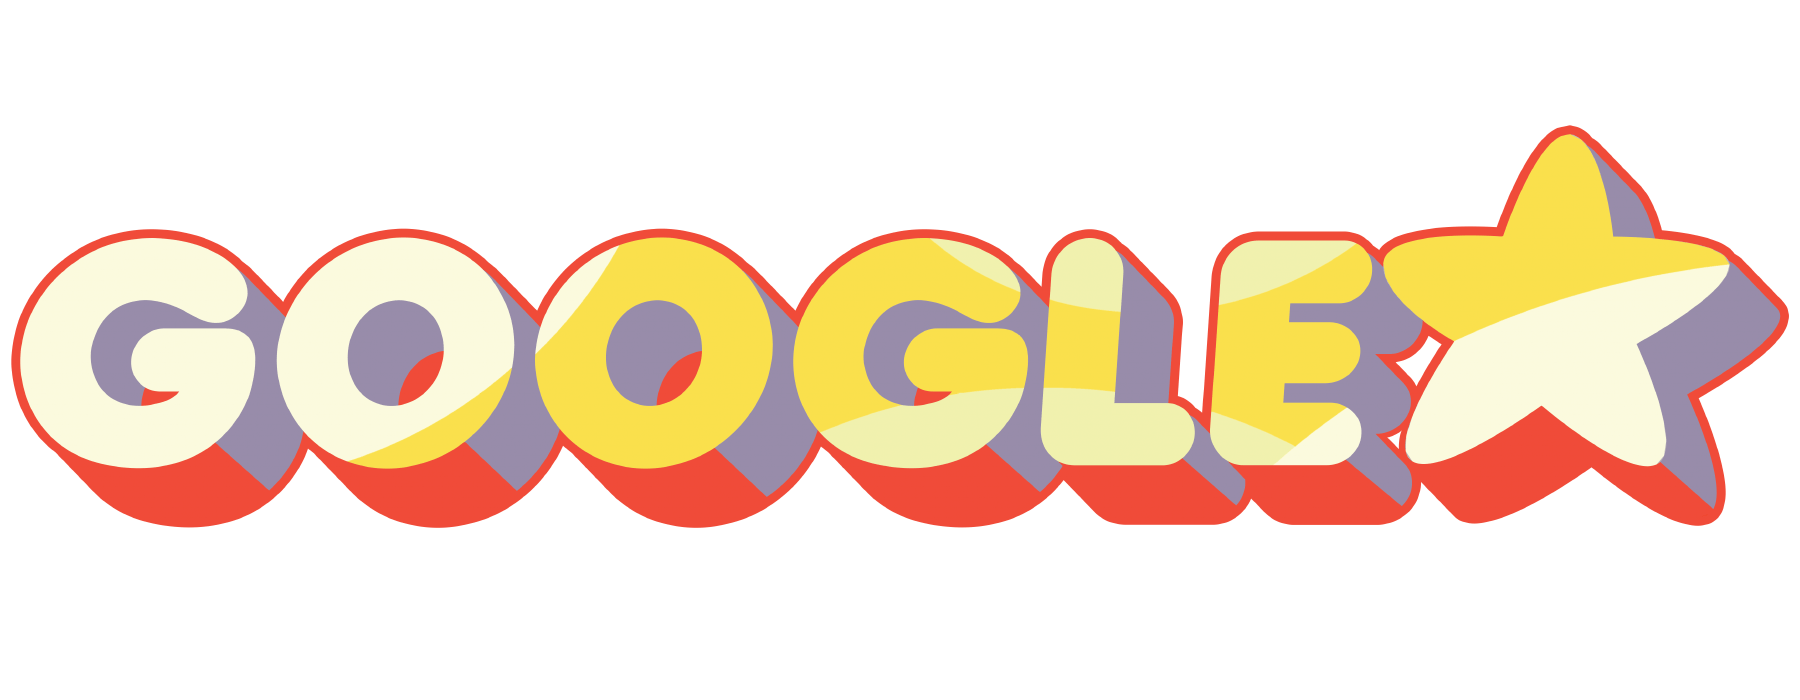 Updated Google Logo - Steven Universe Google Logo [Updated]